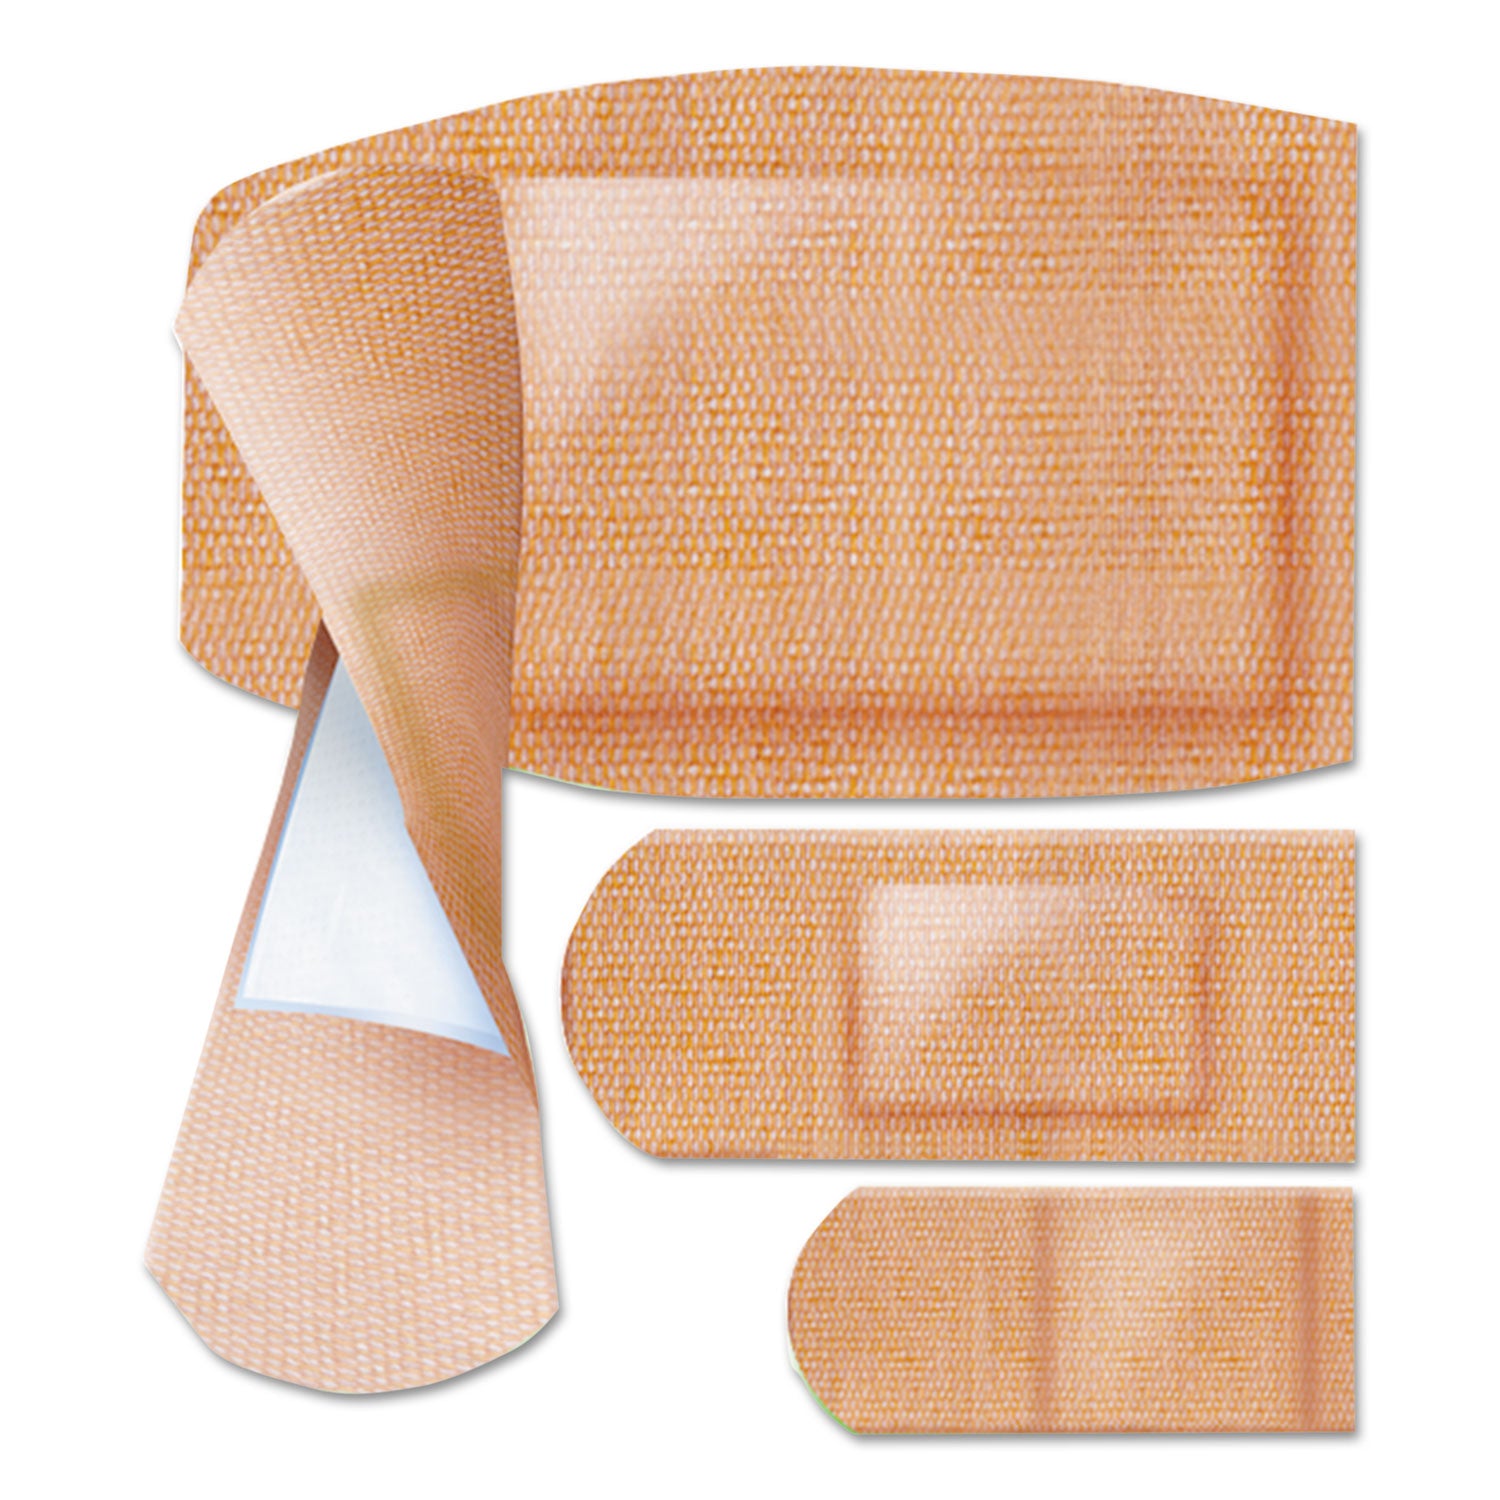 flex-fabric-bandages-assorted-sizes-100-box_miicur0700rb - 2